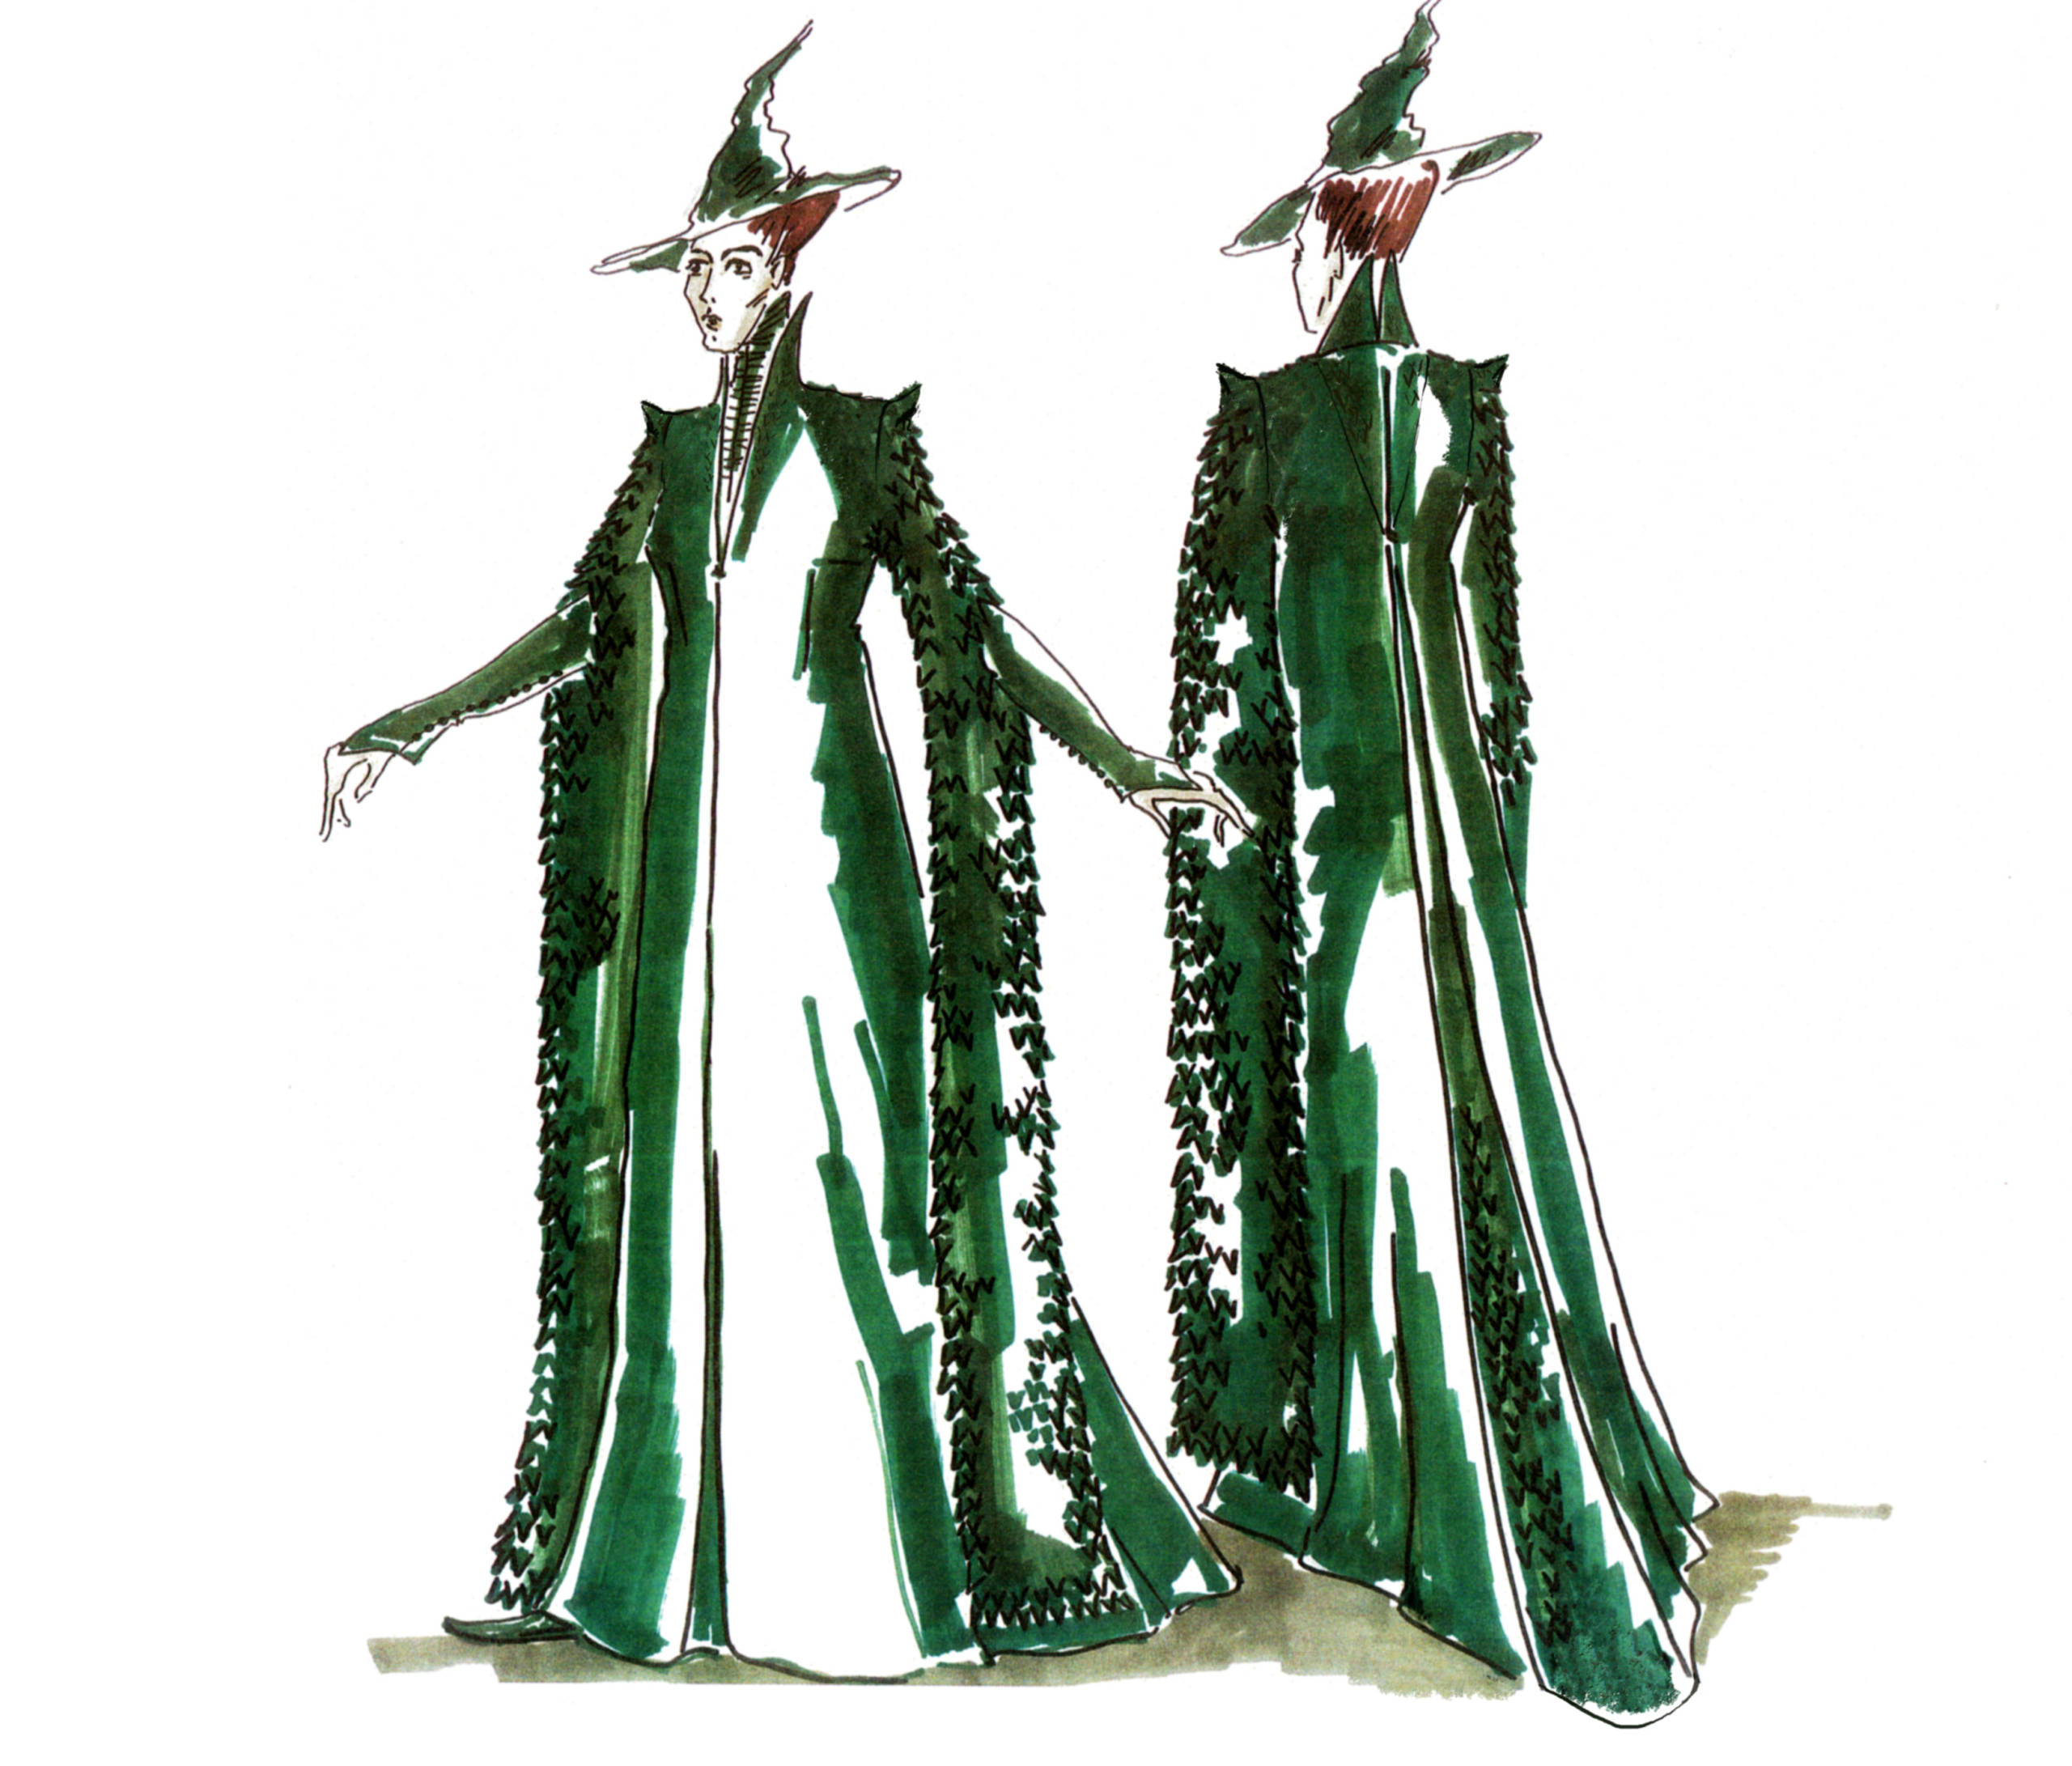 An illustration of McGonagall's robes 